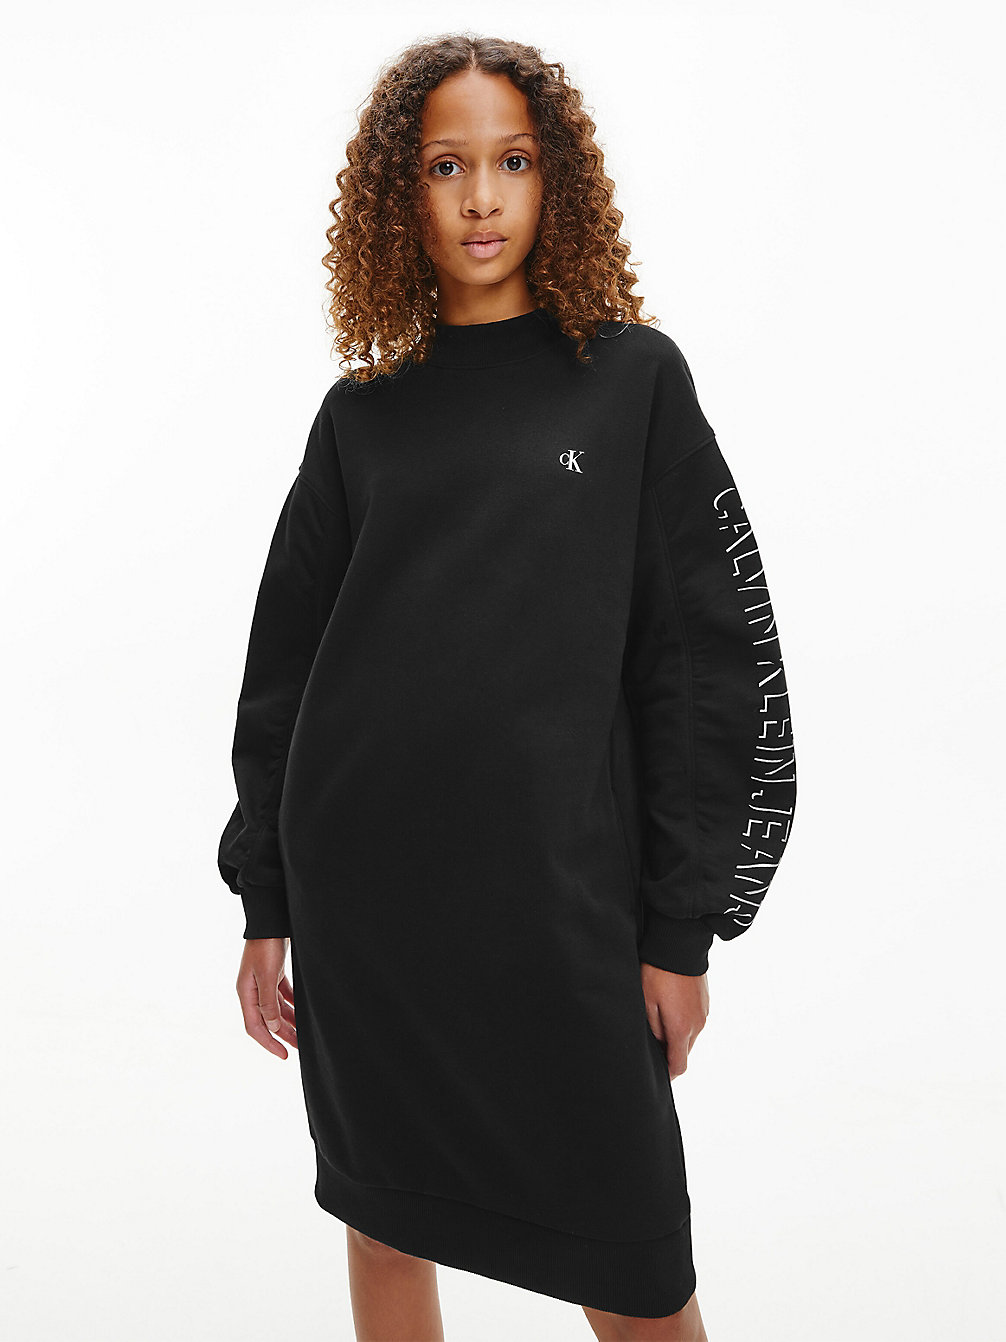 CK BLACK > Oversized Sweaterjurk Van Biologisch Katoen > undefined girls - Calvin Klein